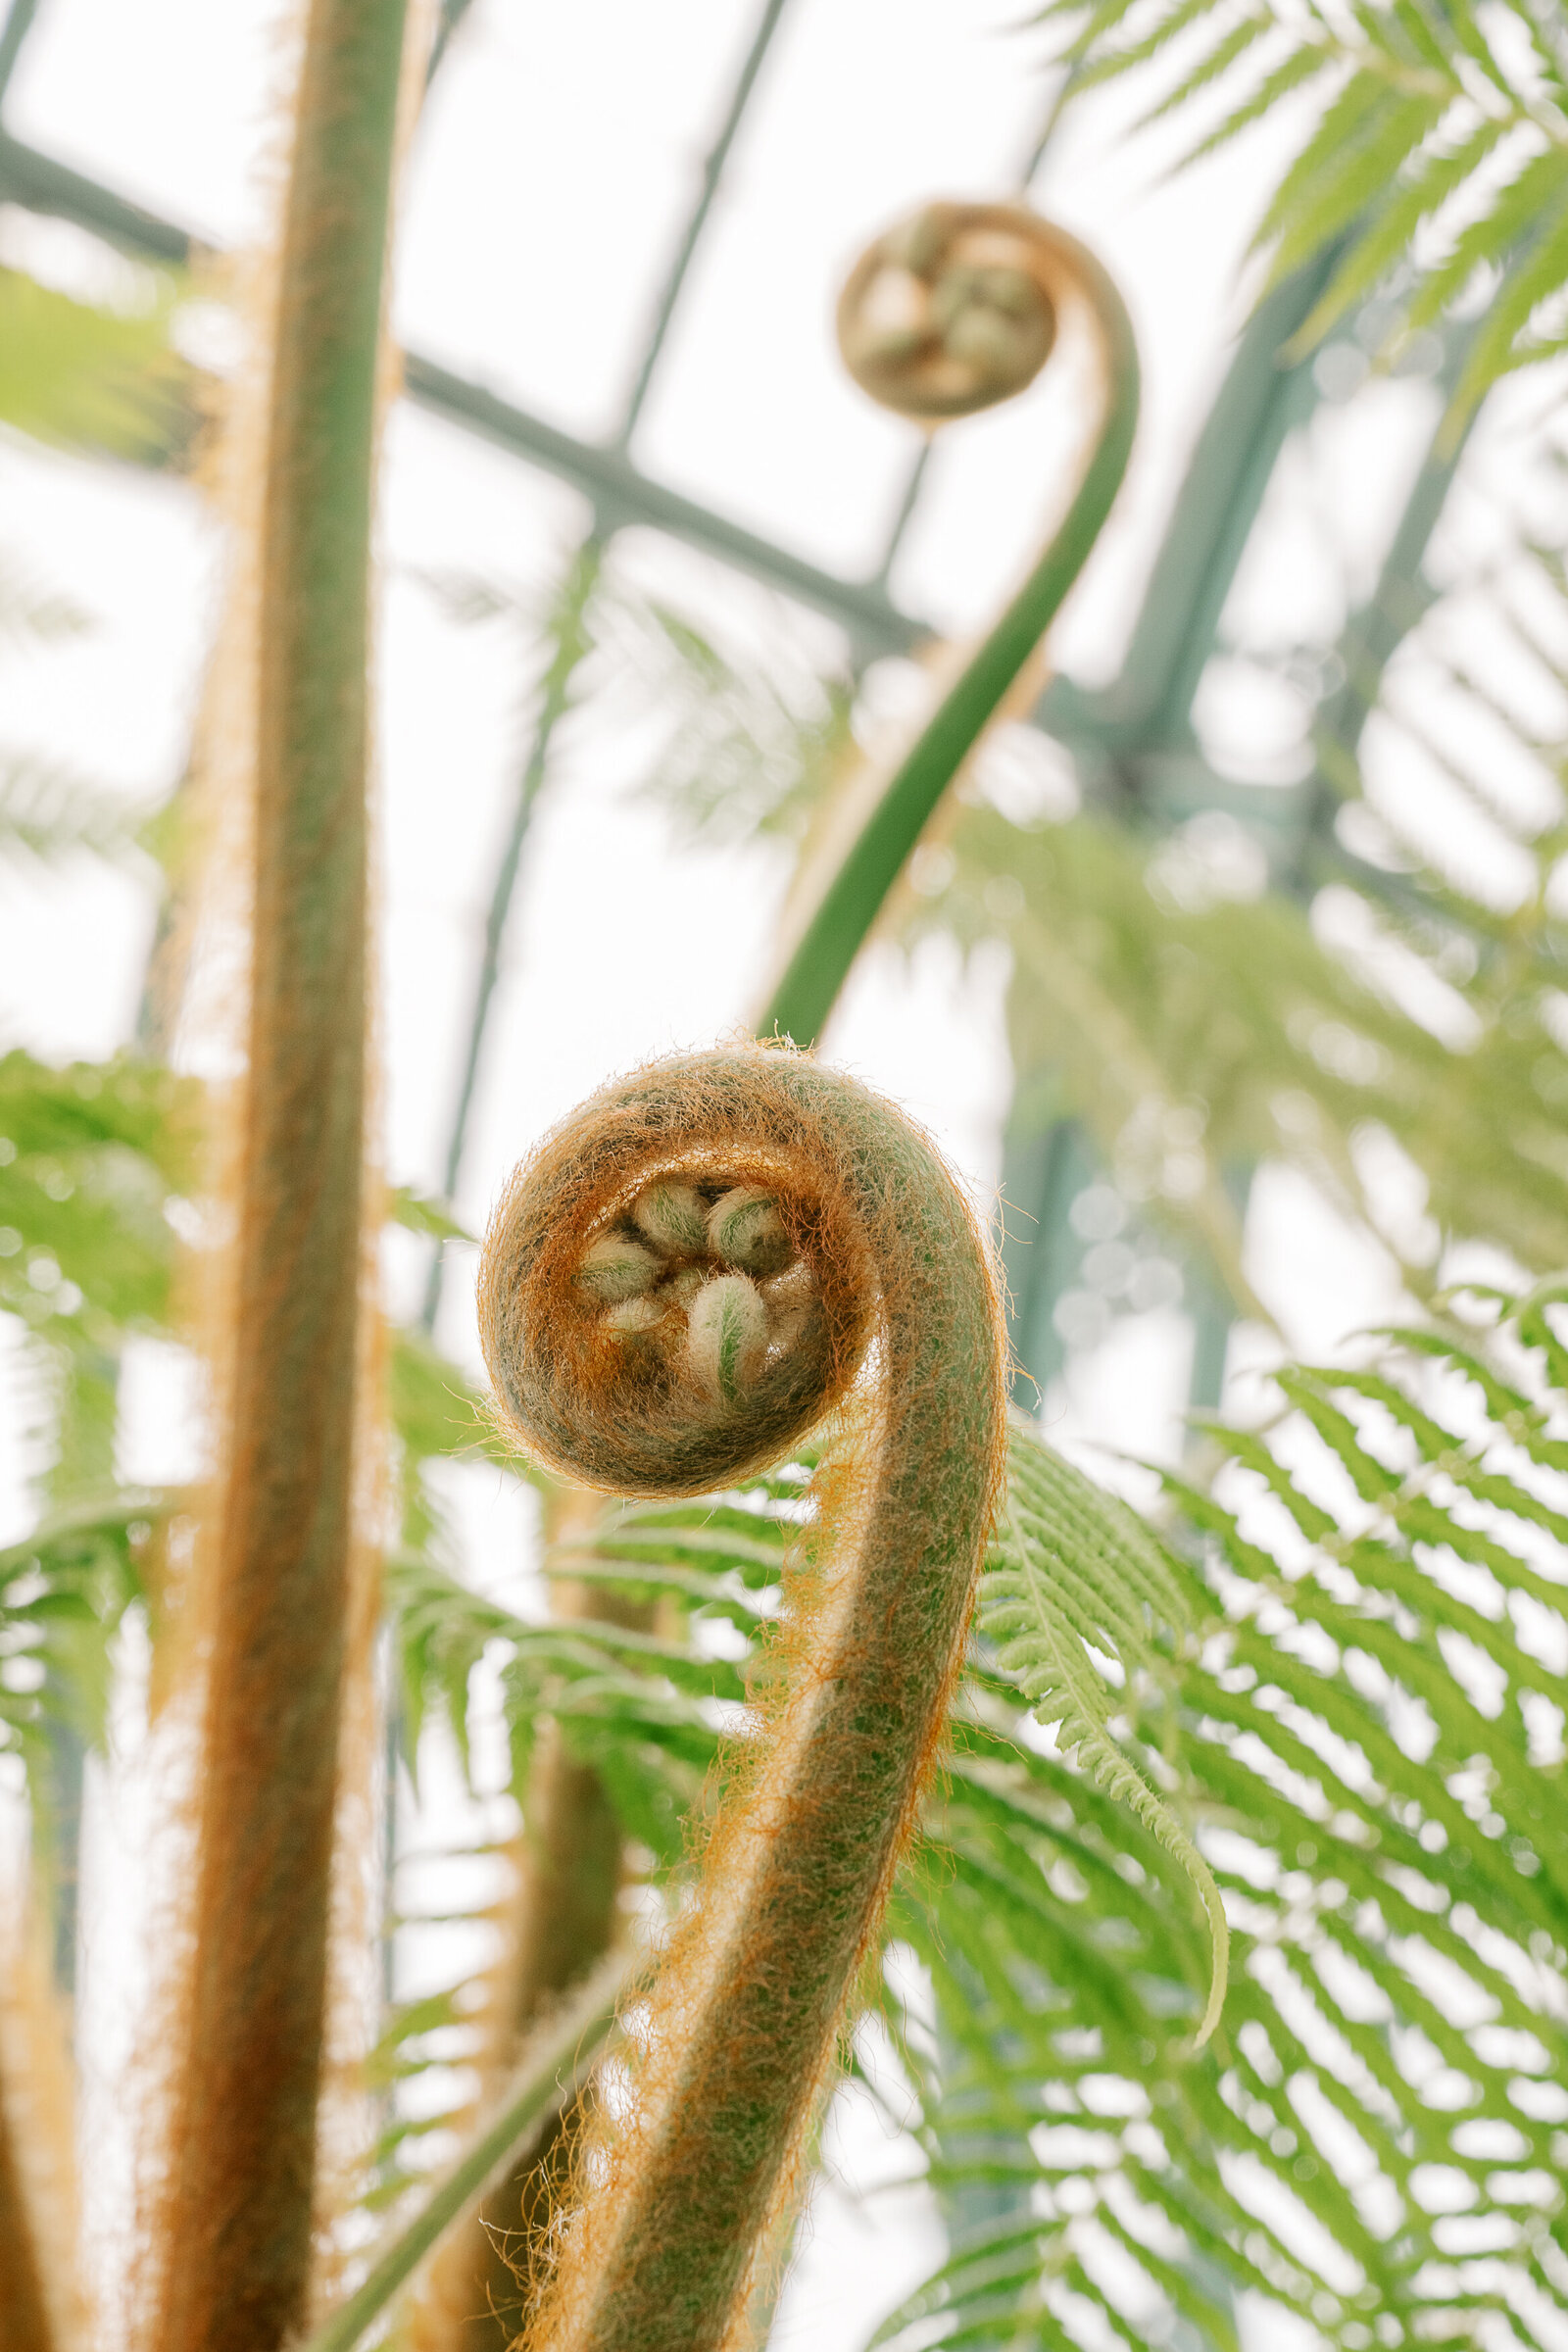 Fernheads grow in the Royal Greenhouses Laeken